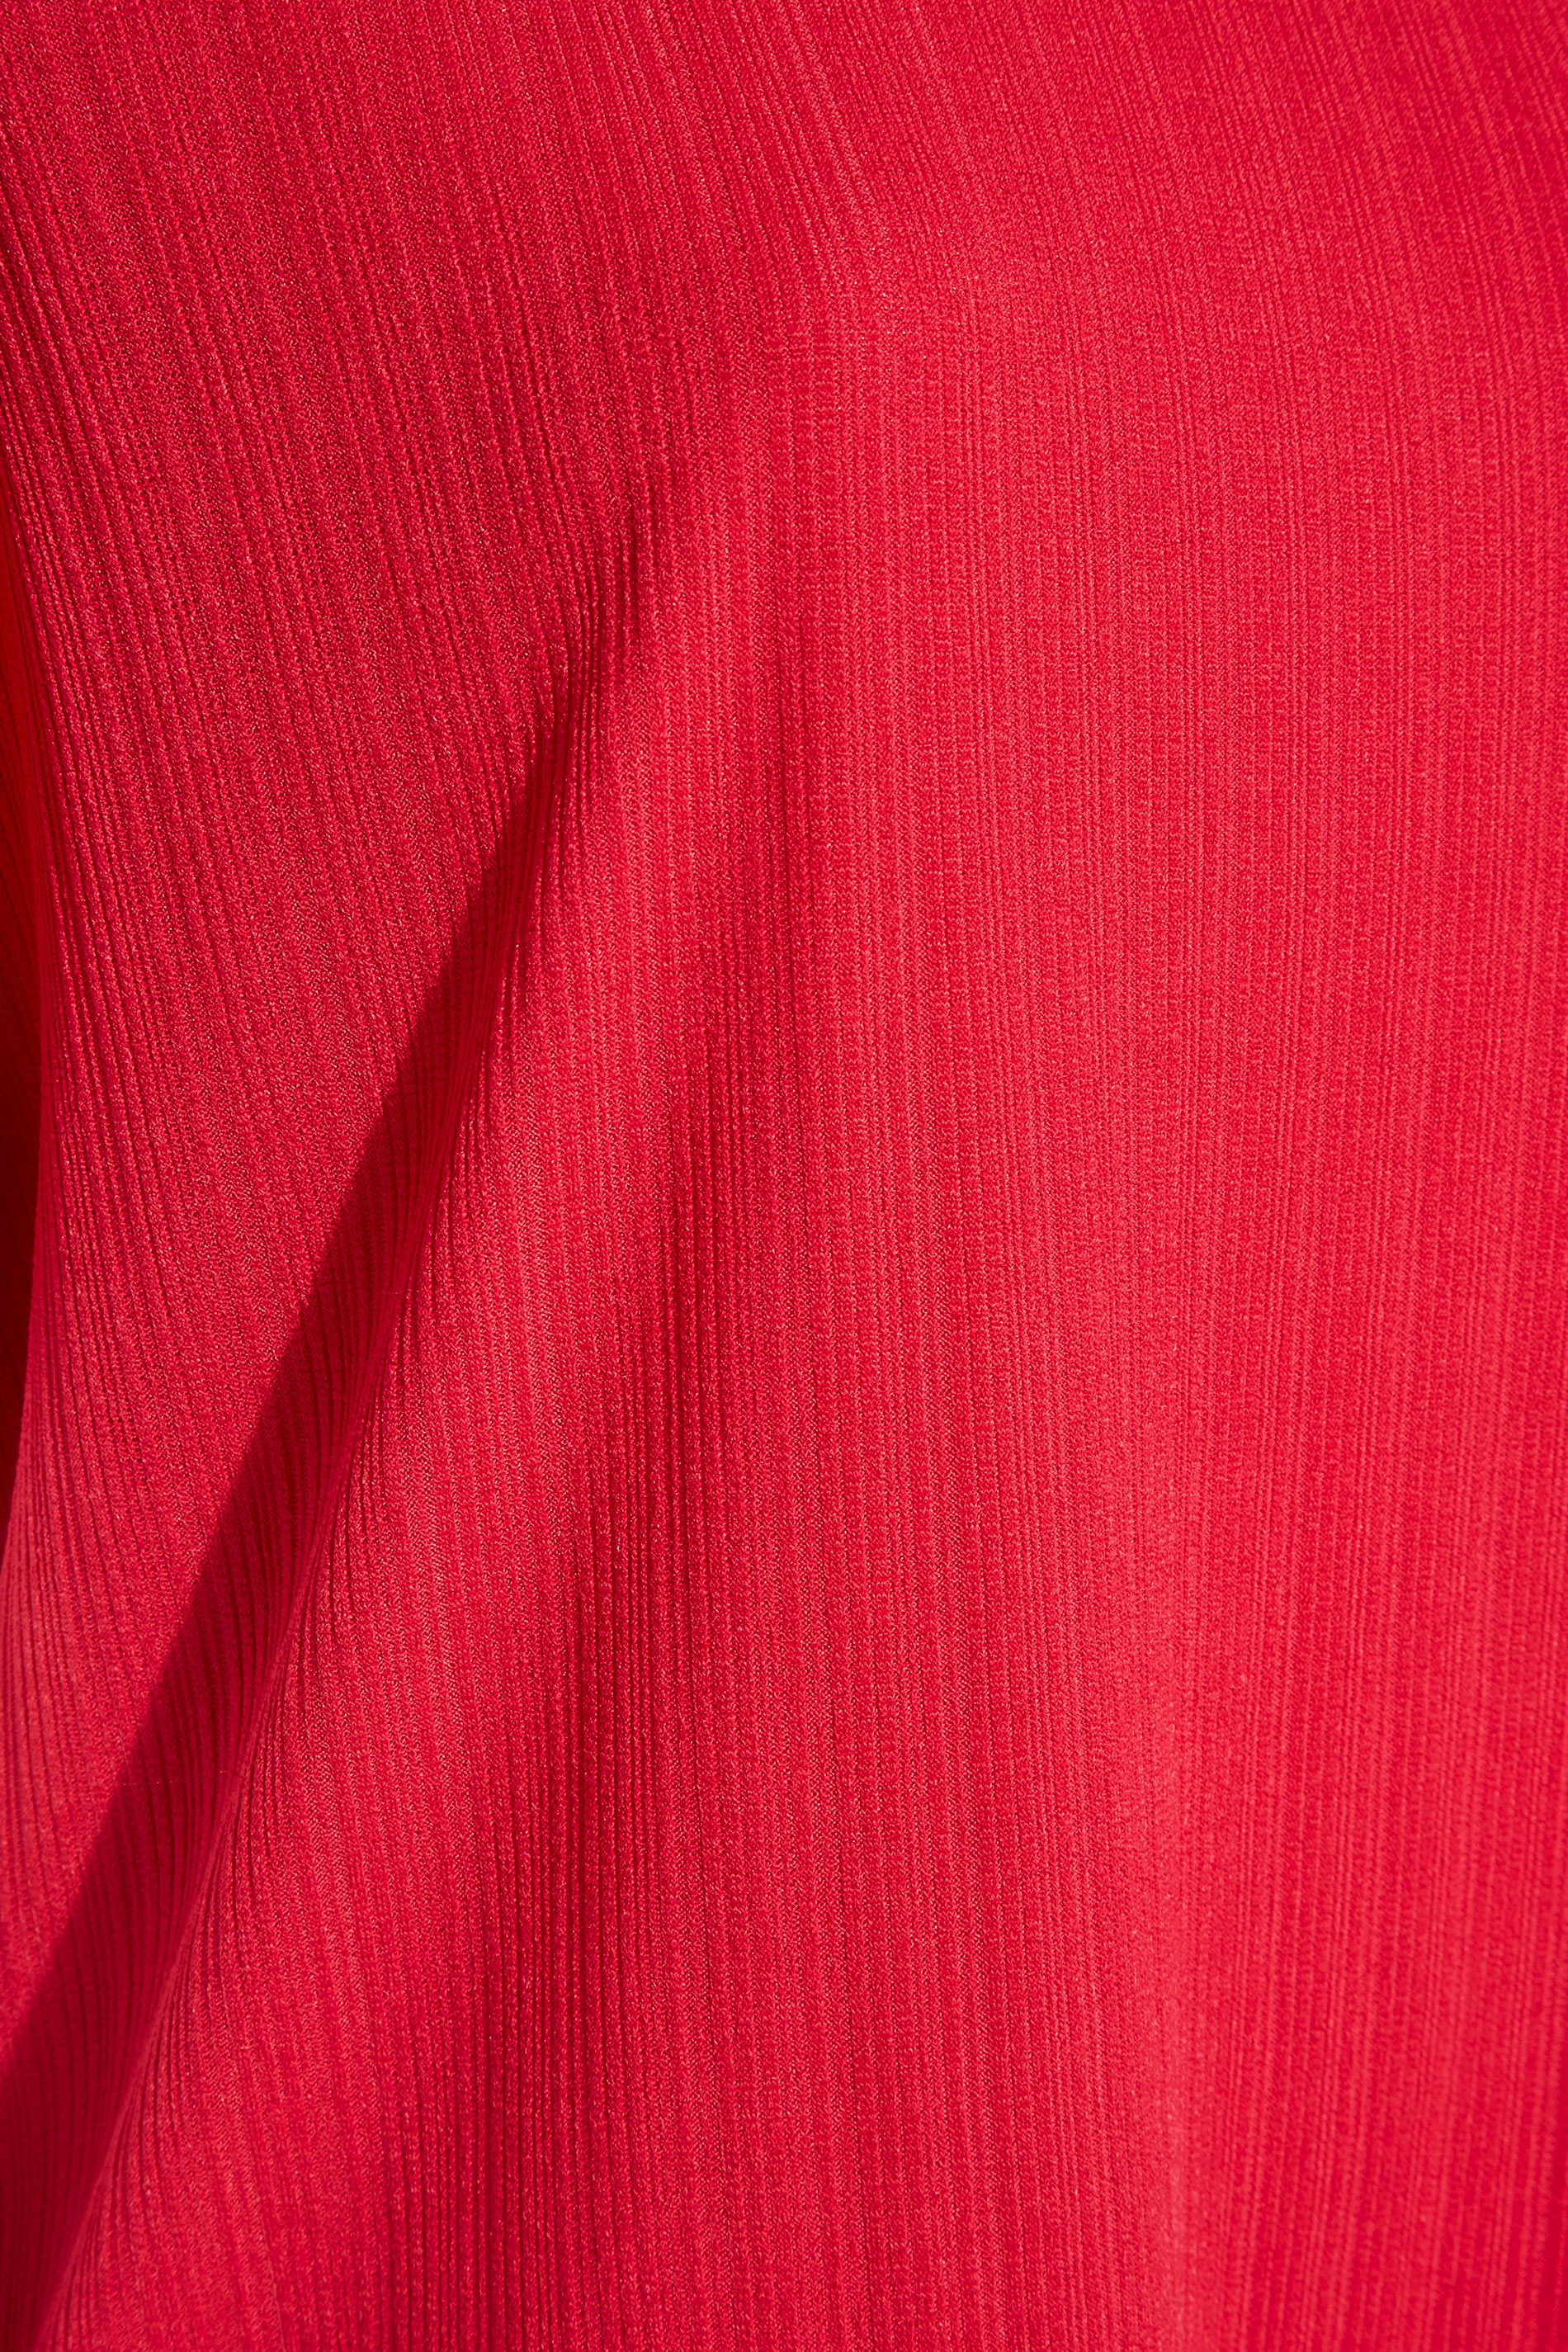 Grande taille  Tops Grande taille  Tops Jersey | T-Shirt Rouge Volanté Style Nervuré - FR37470